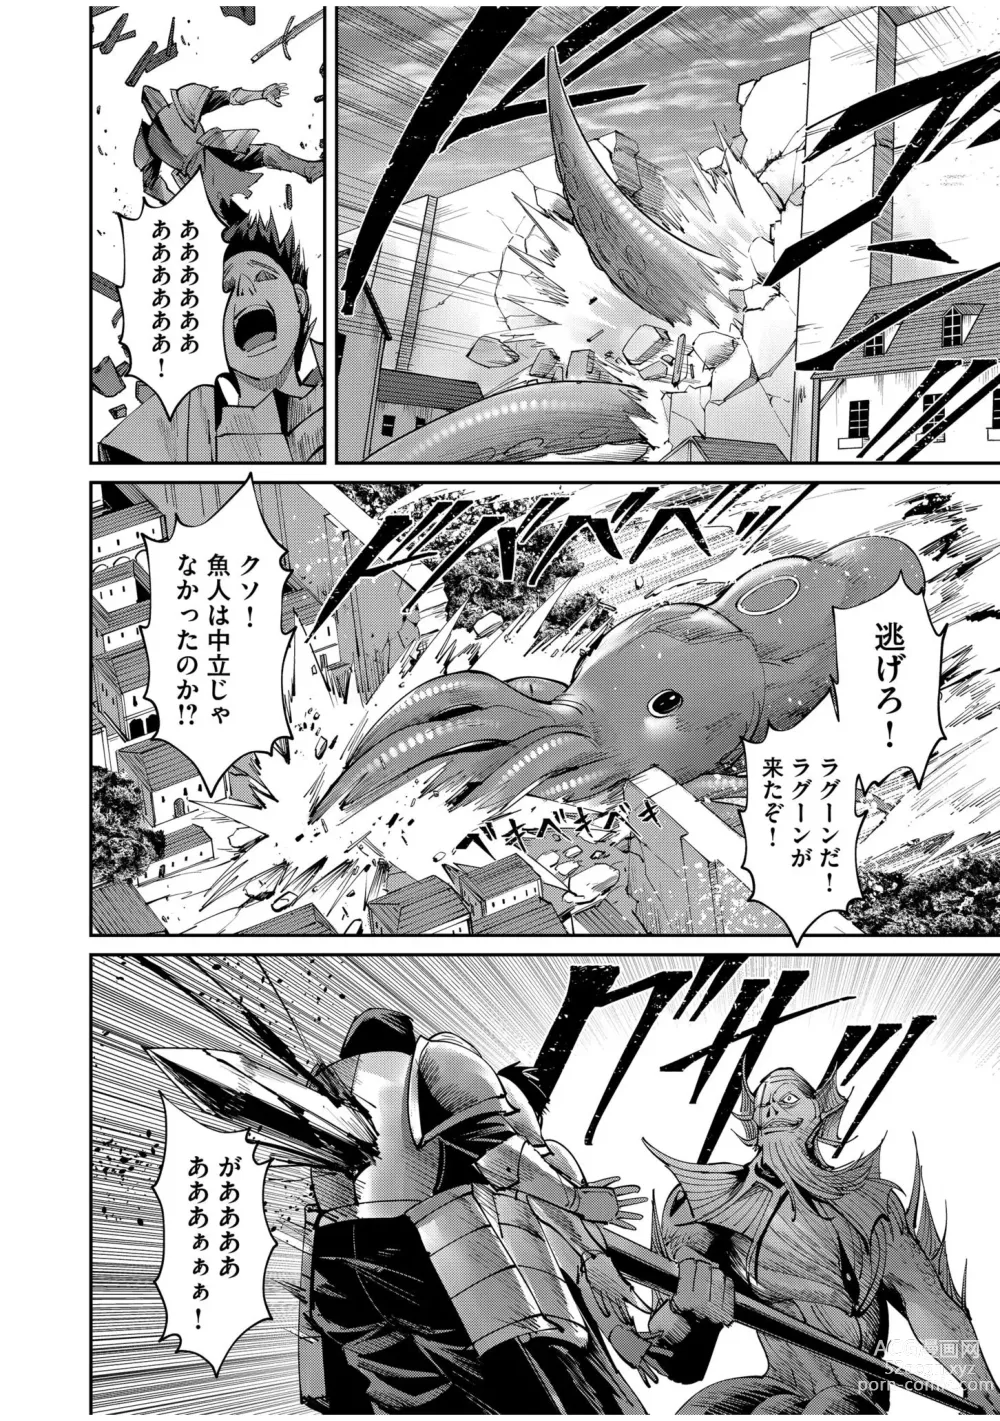 Page 8 of manga Kichiku Eiyuu Vol.07